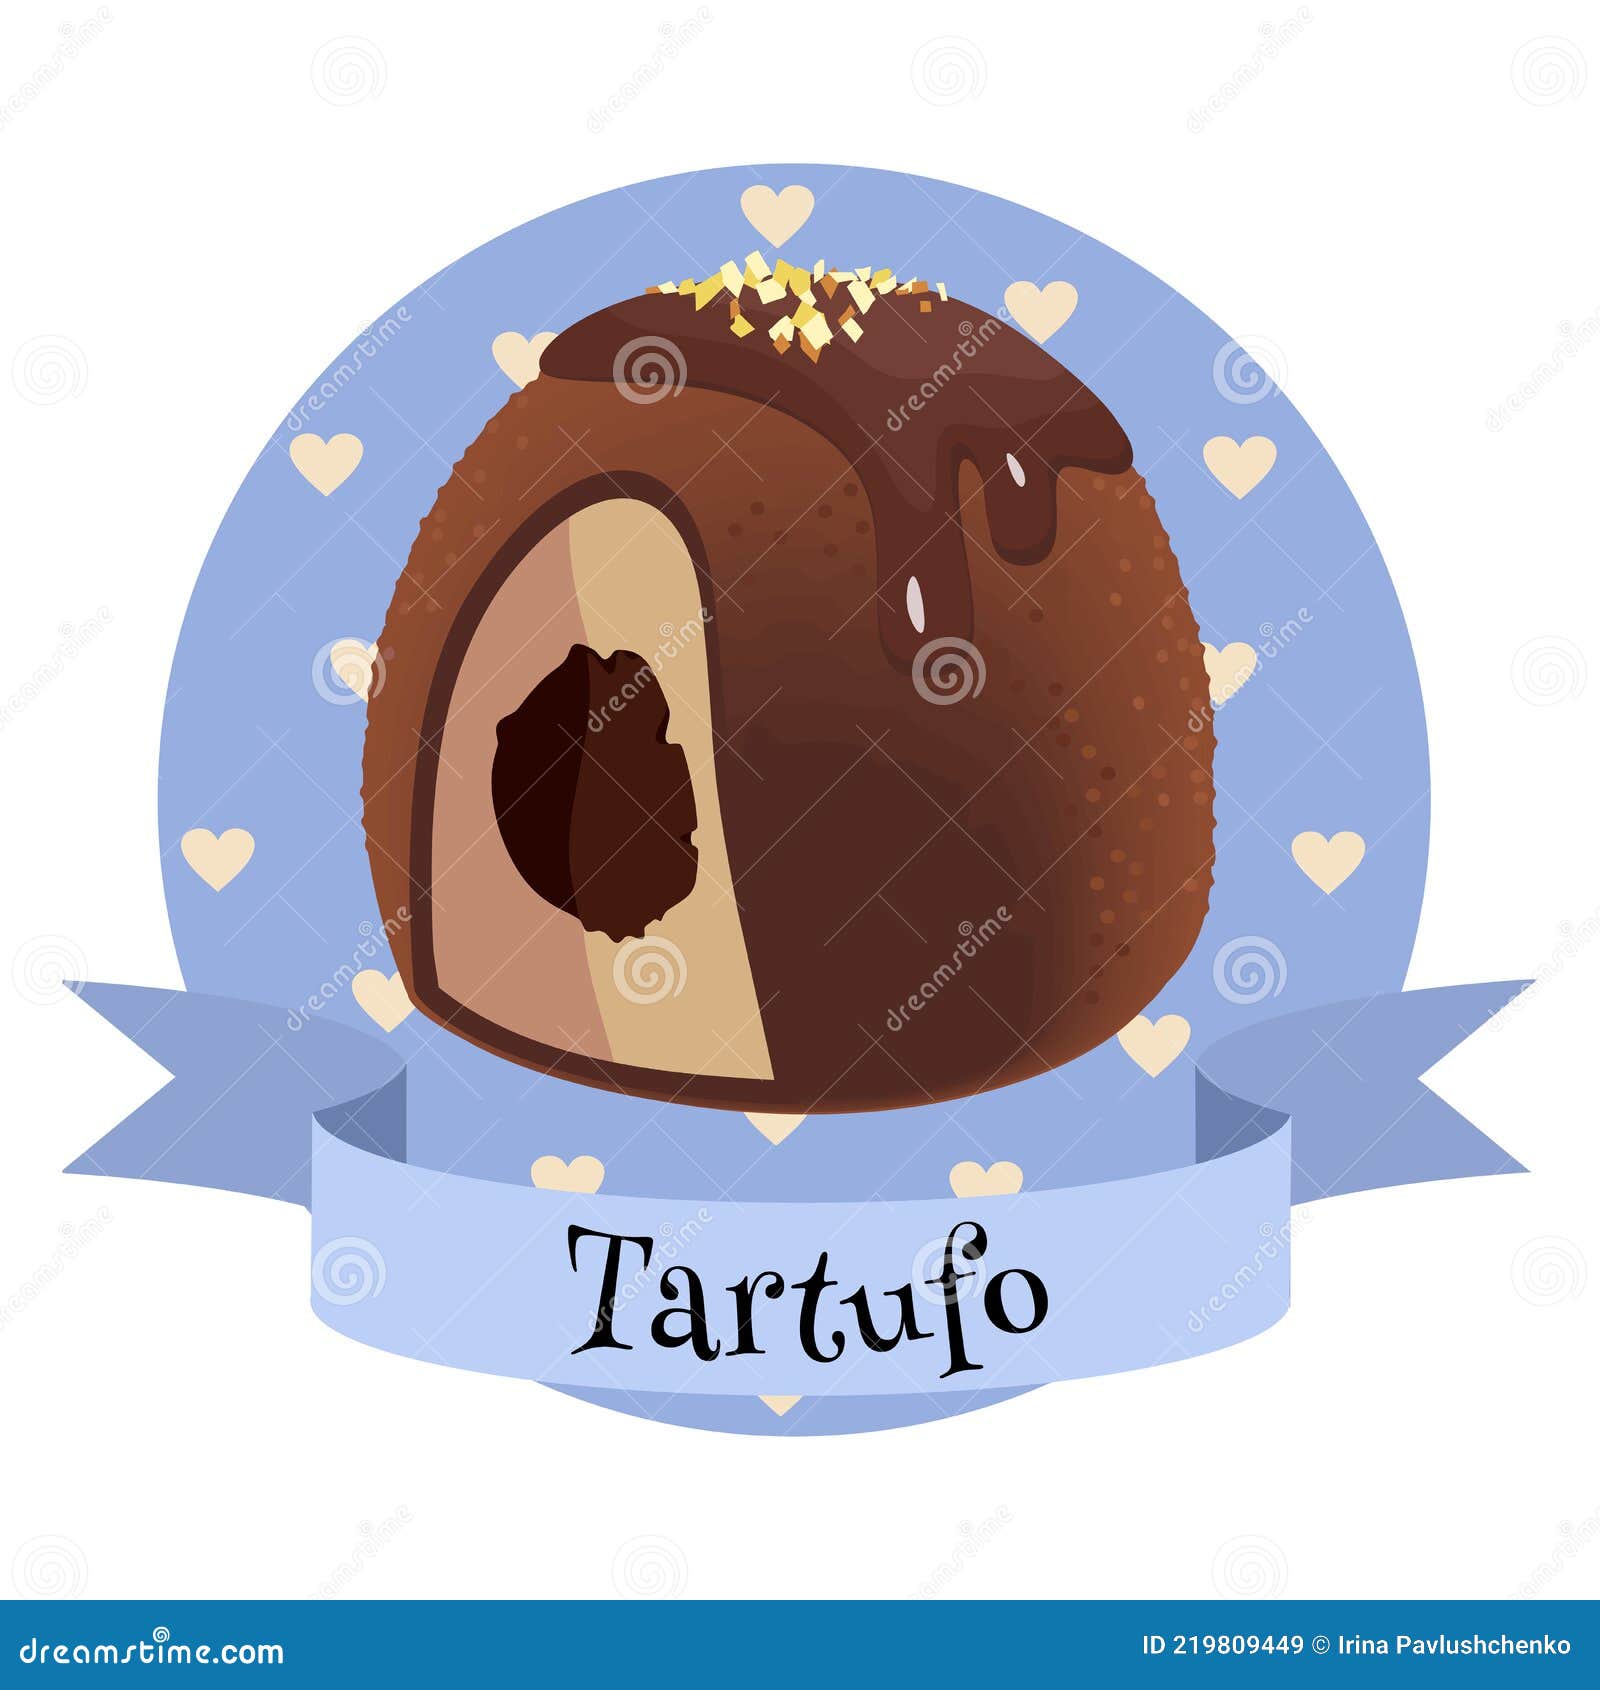 Tartufo – Chocolate Zabajone | Sicilian Ice Cream